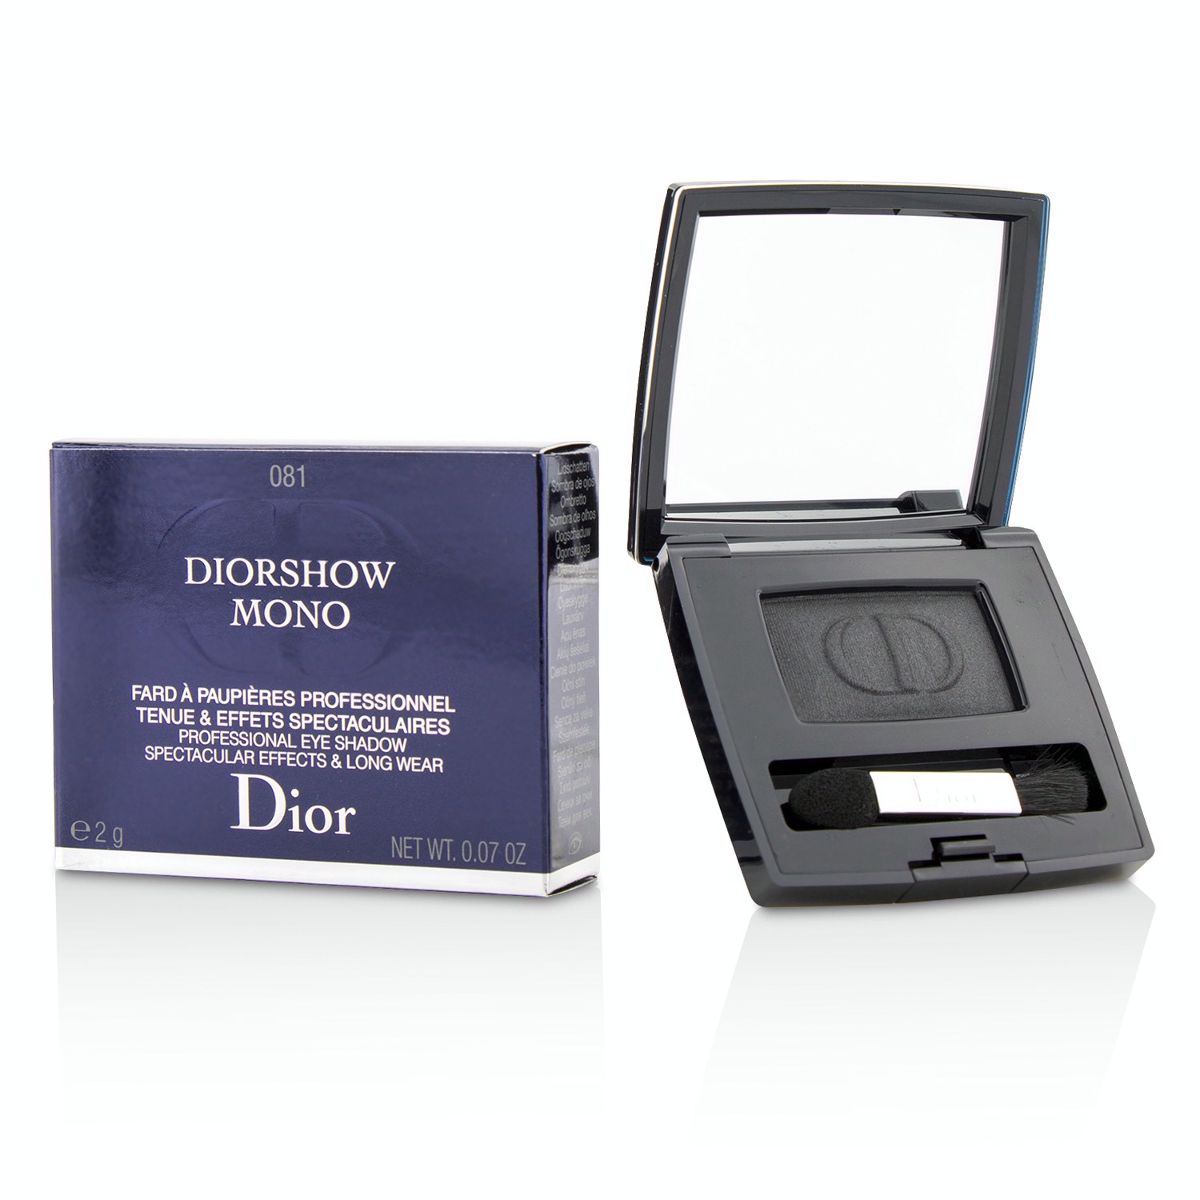 Diorshow Mono Professional Spectacular Effects  Long Wear Eyeshadow - # 081 Runway Christian Dior Image